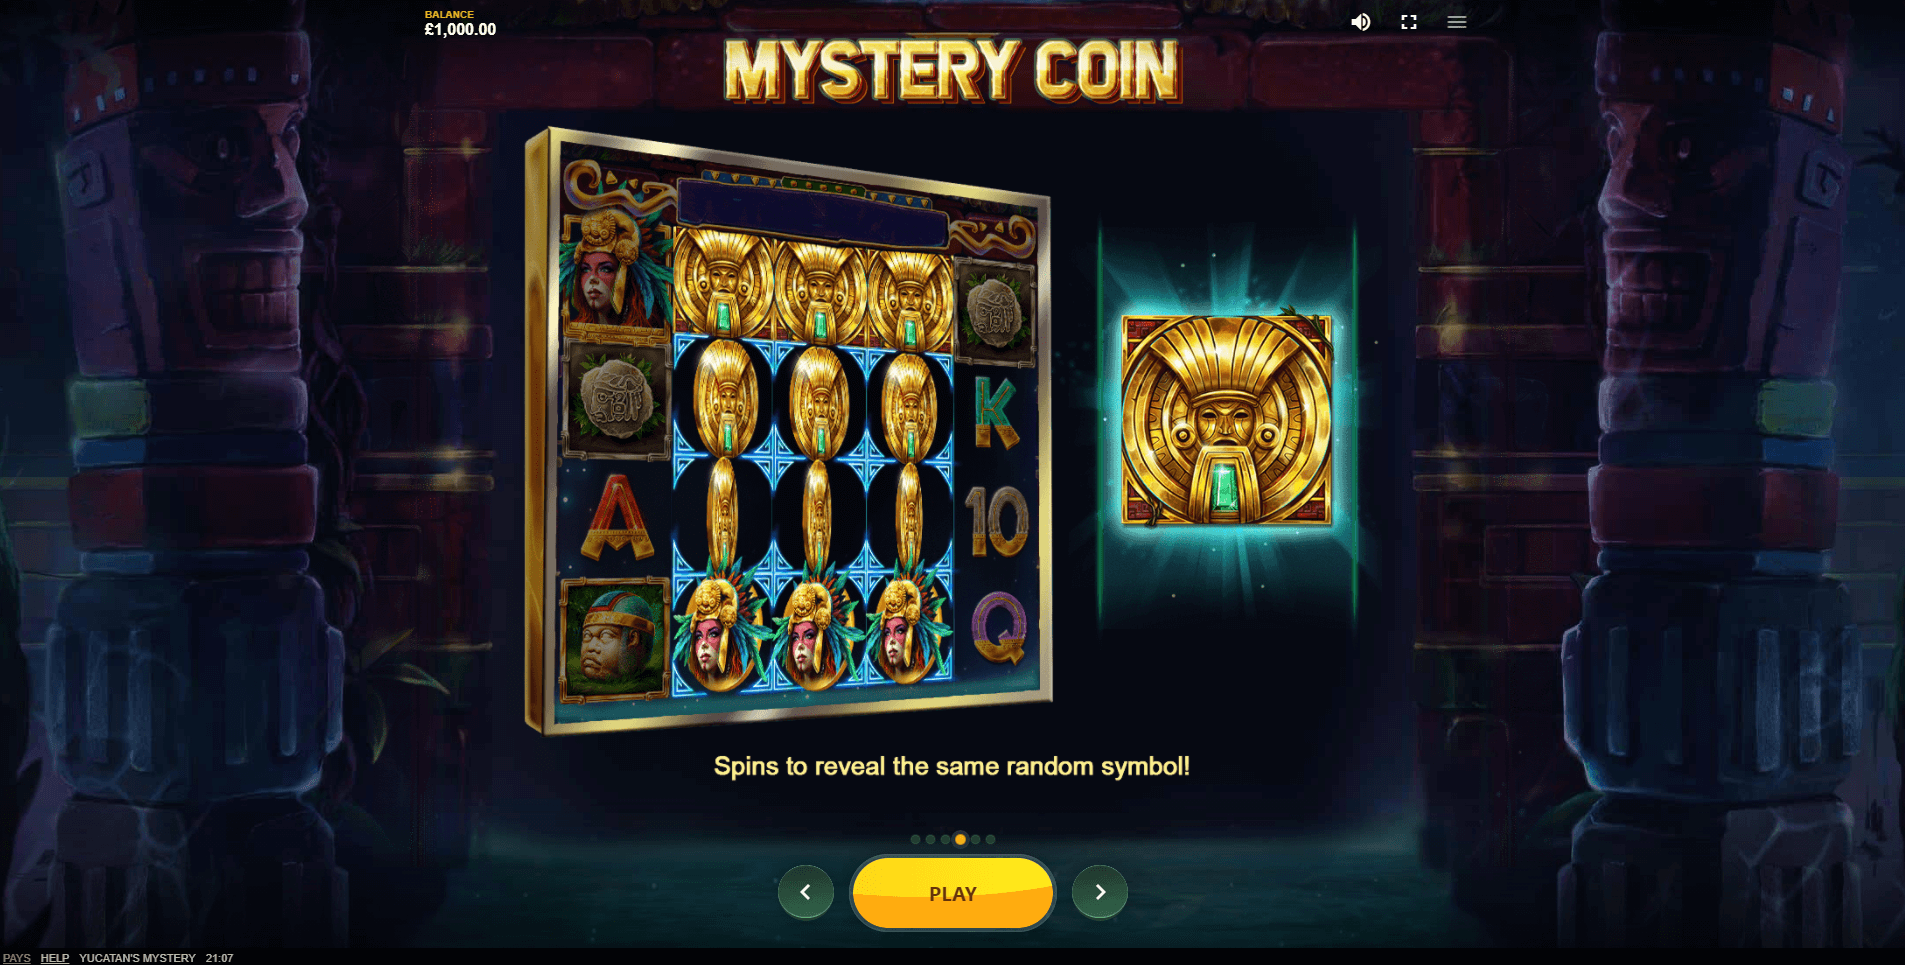 yucatans mystery slot machine detail image 2